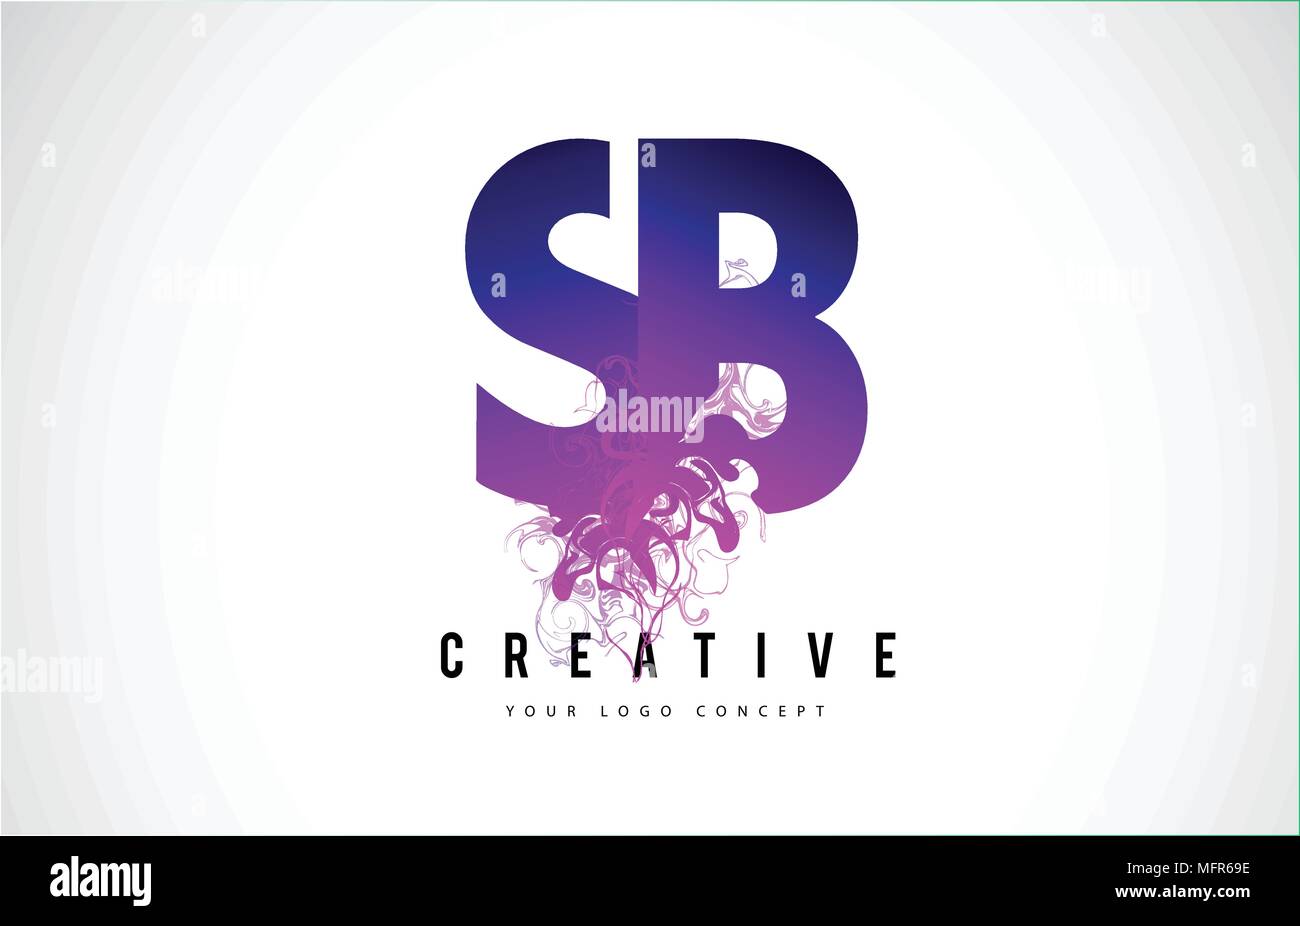 SB S B Purple Letter Logo Design with Creative Liquid Effect Flowing Vector Illustration. Stock Vector